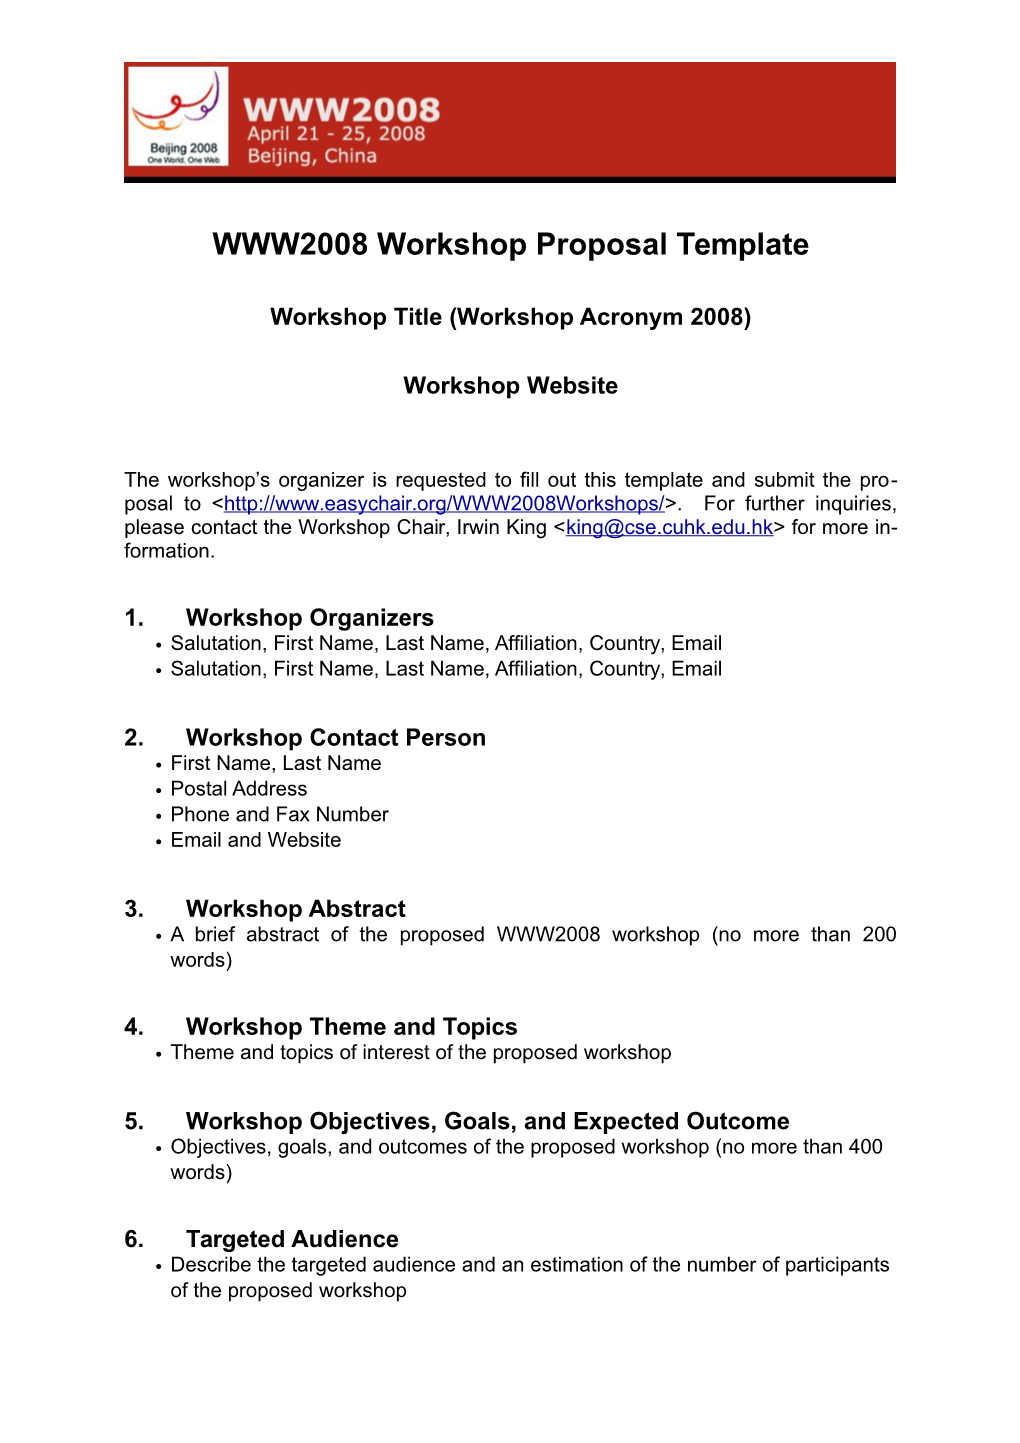 Workshop Title (Workshop Acronym 2008)